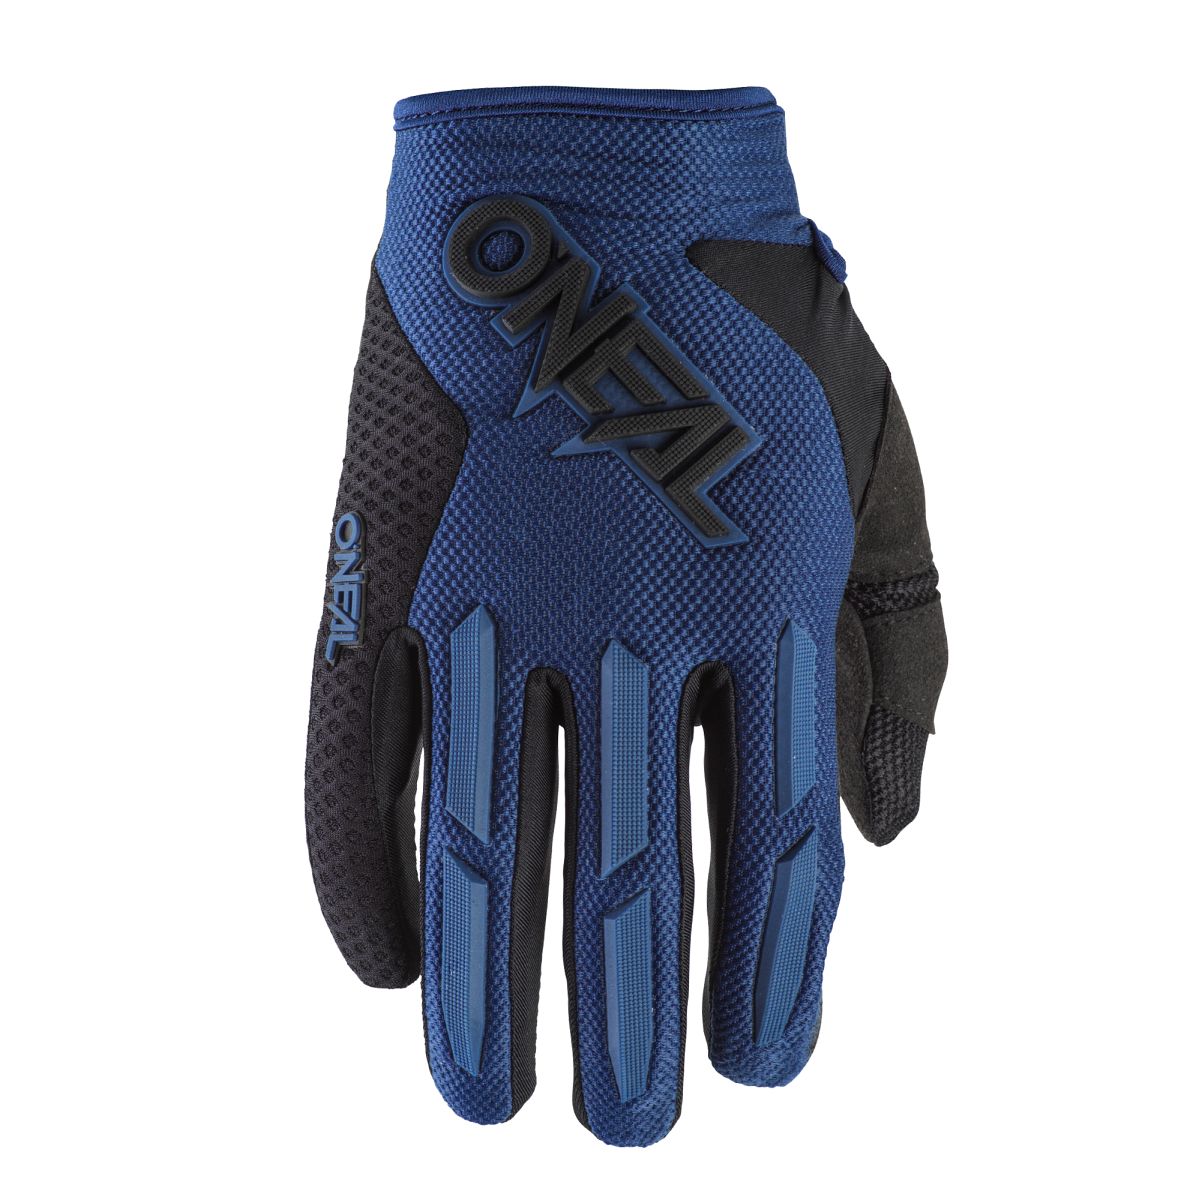 M Gr/ö/ße 8.5 ONeal Element MX DH FR Handschuhe schwarz 2020 Oneal